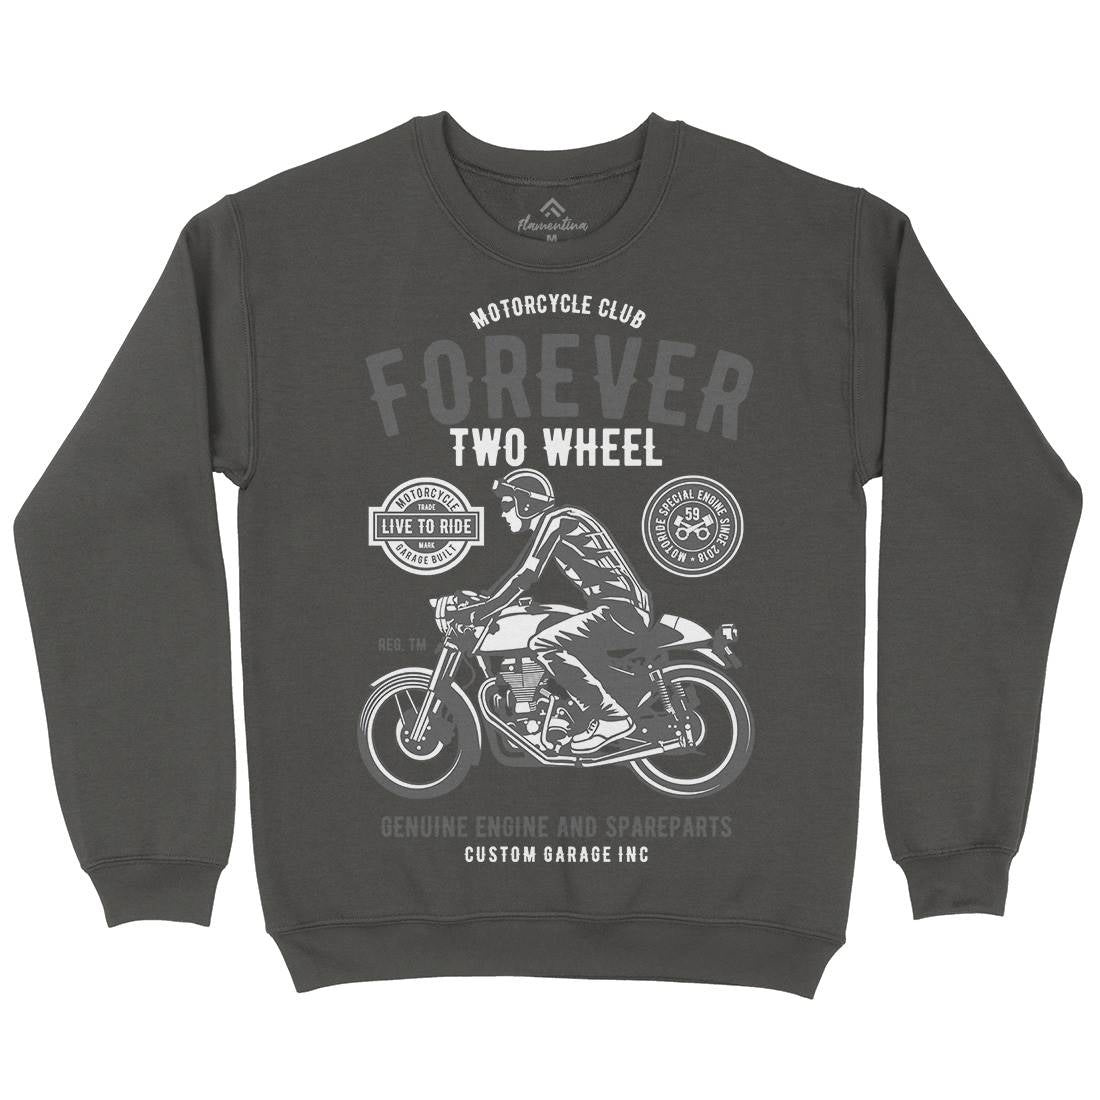 Forever Two Wheel Kids Crew Neck Sweatshirt Motorcycles B212